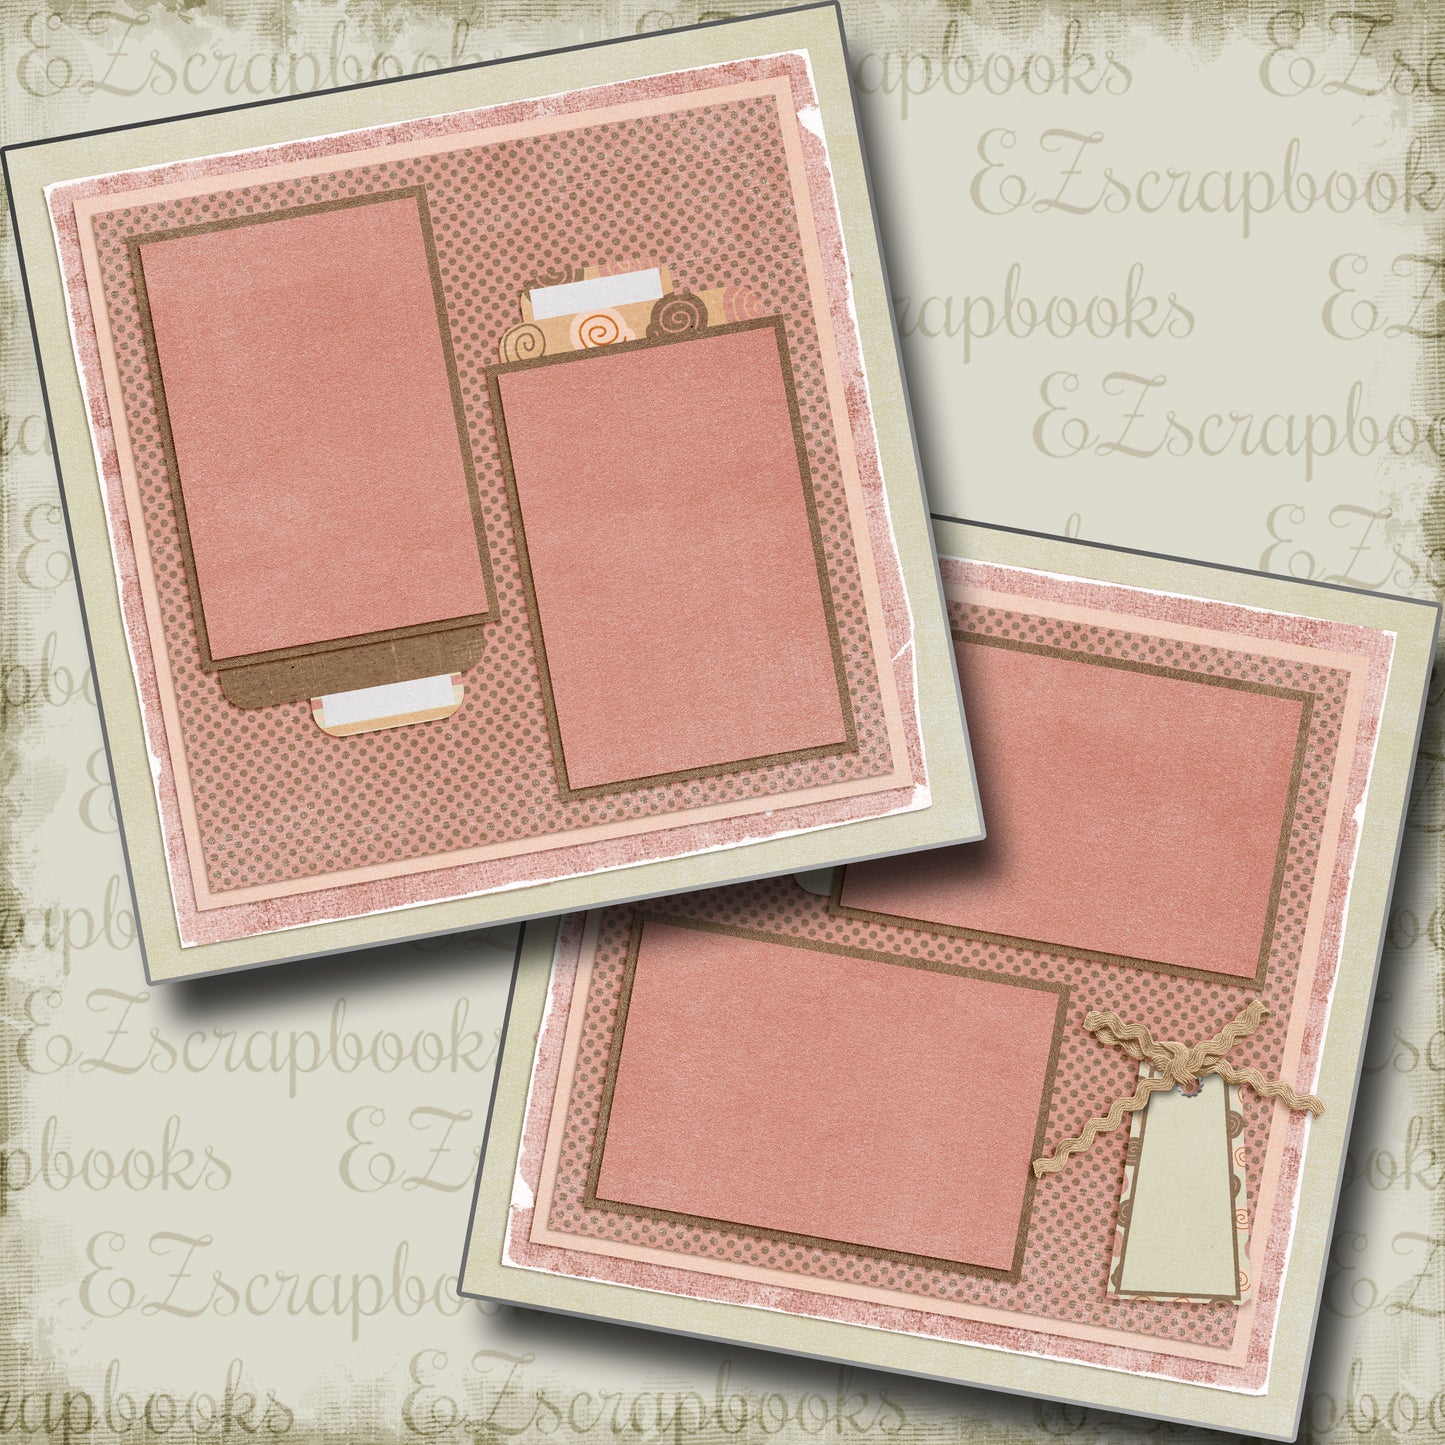 Pretty in Pink - 5254 - EZscrapbooks Scrapbook Layouts Baby, Girls